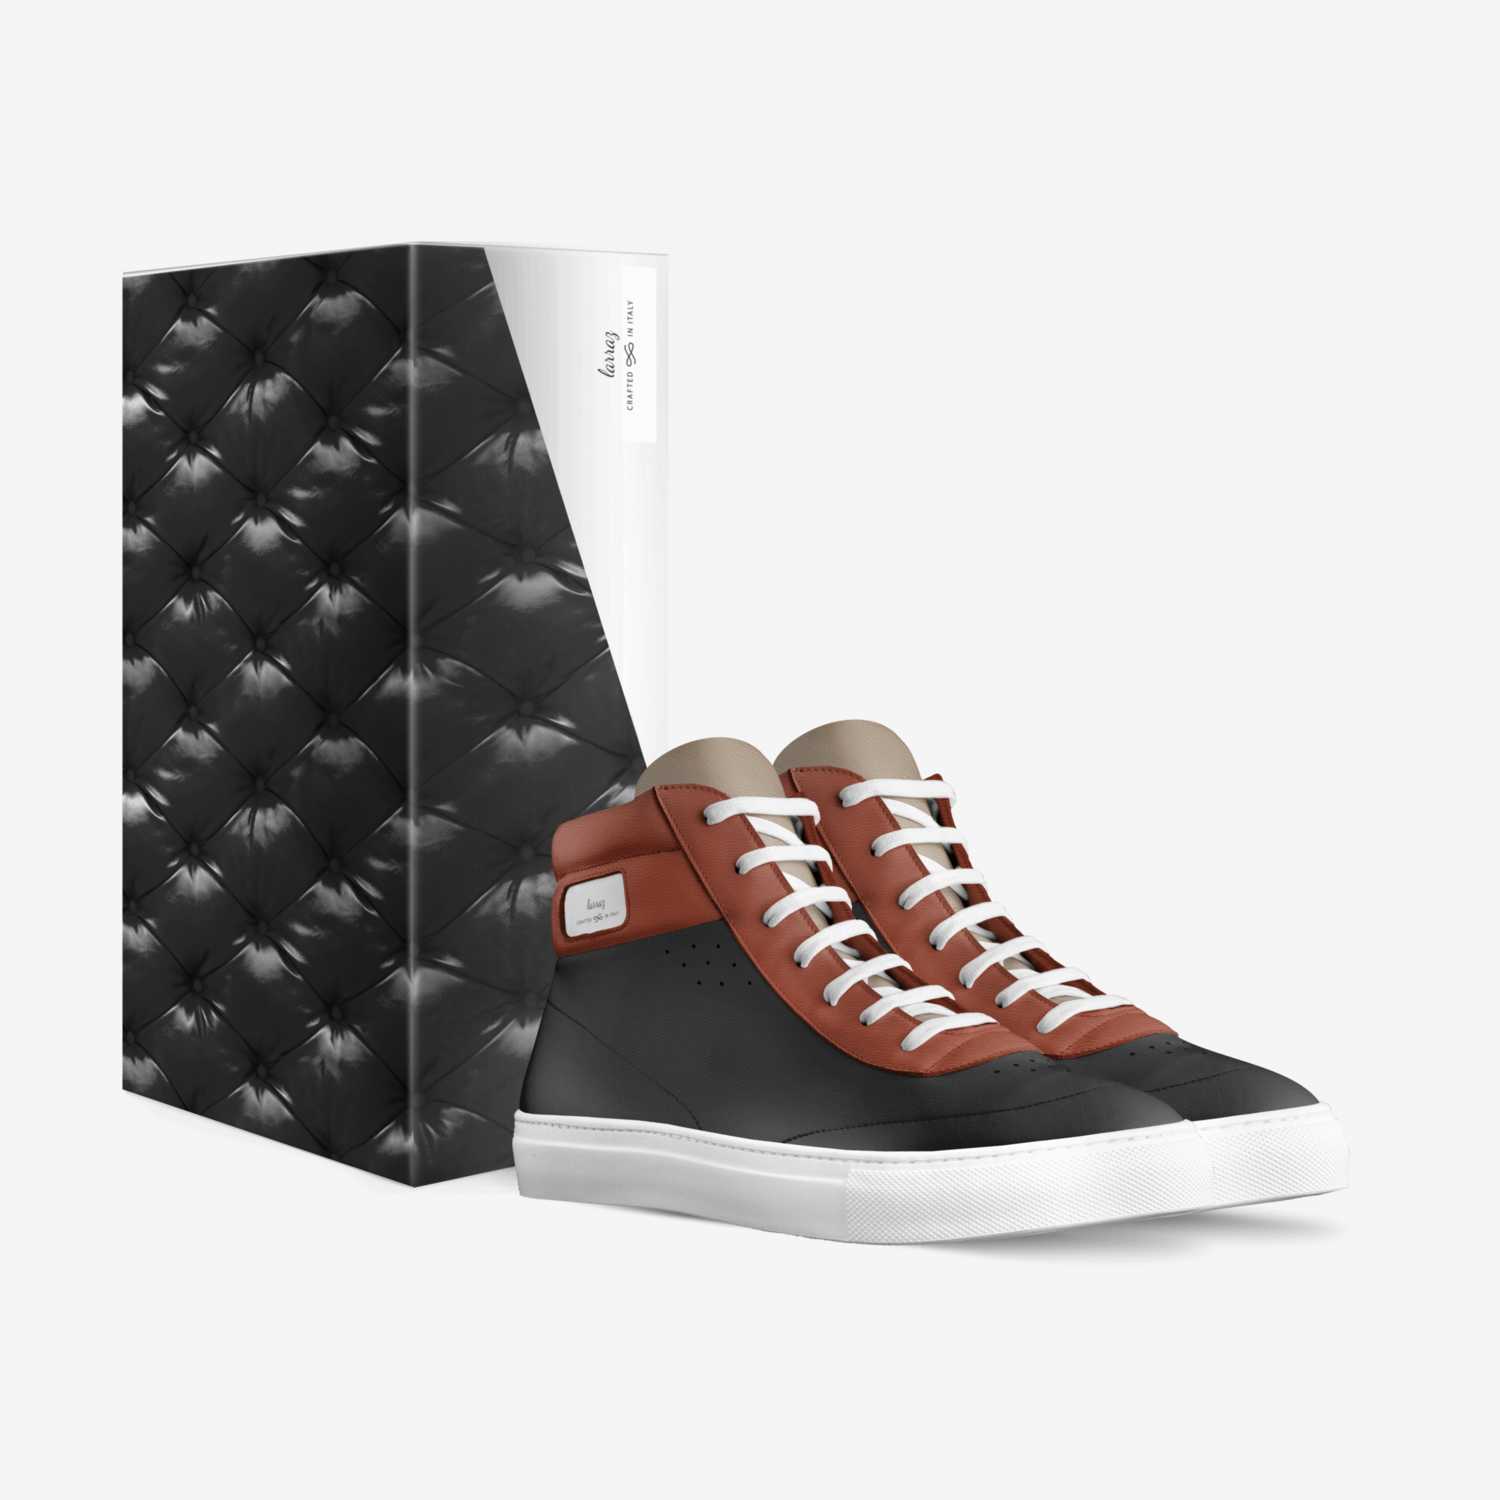 gbu custom made in Italy shoes by Gabriel | Box view